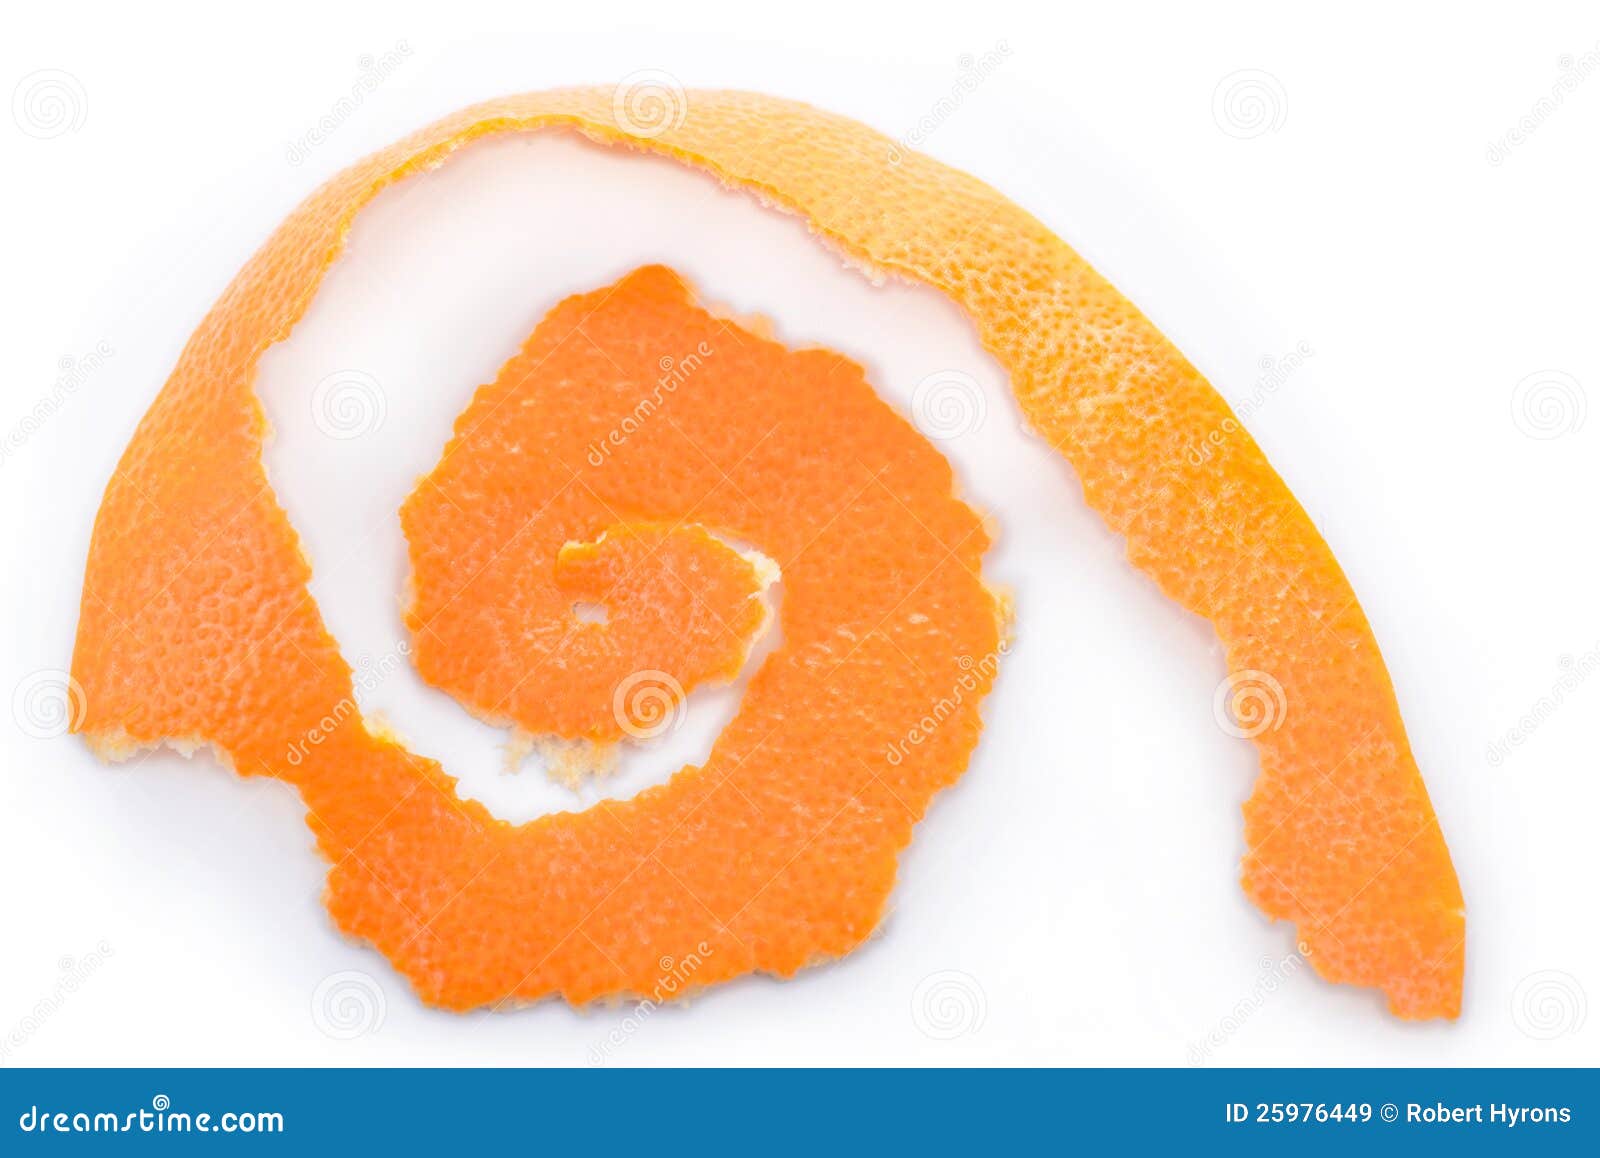 Orange Peel Stock Image Image Of Sweetened Fruity Rind 25976449